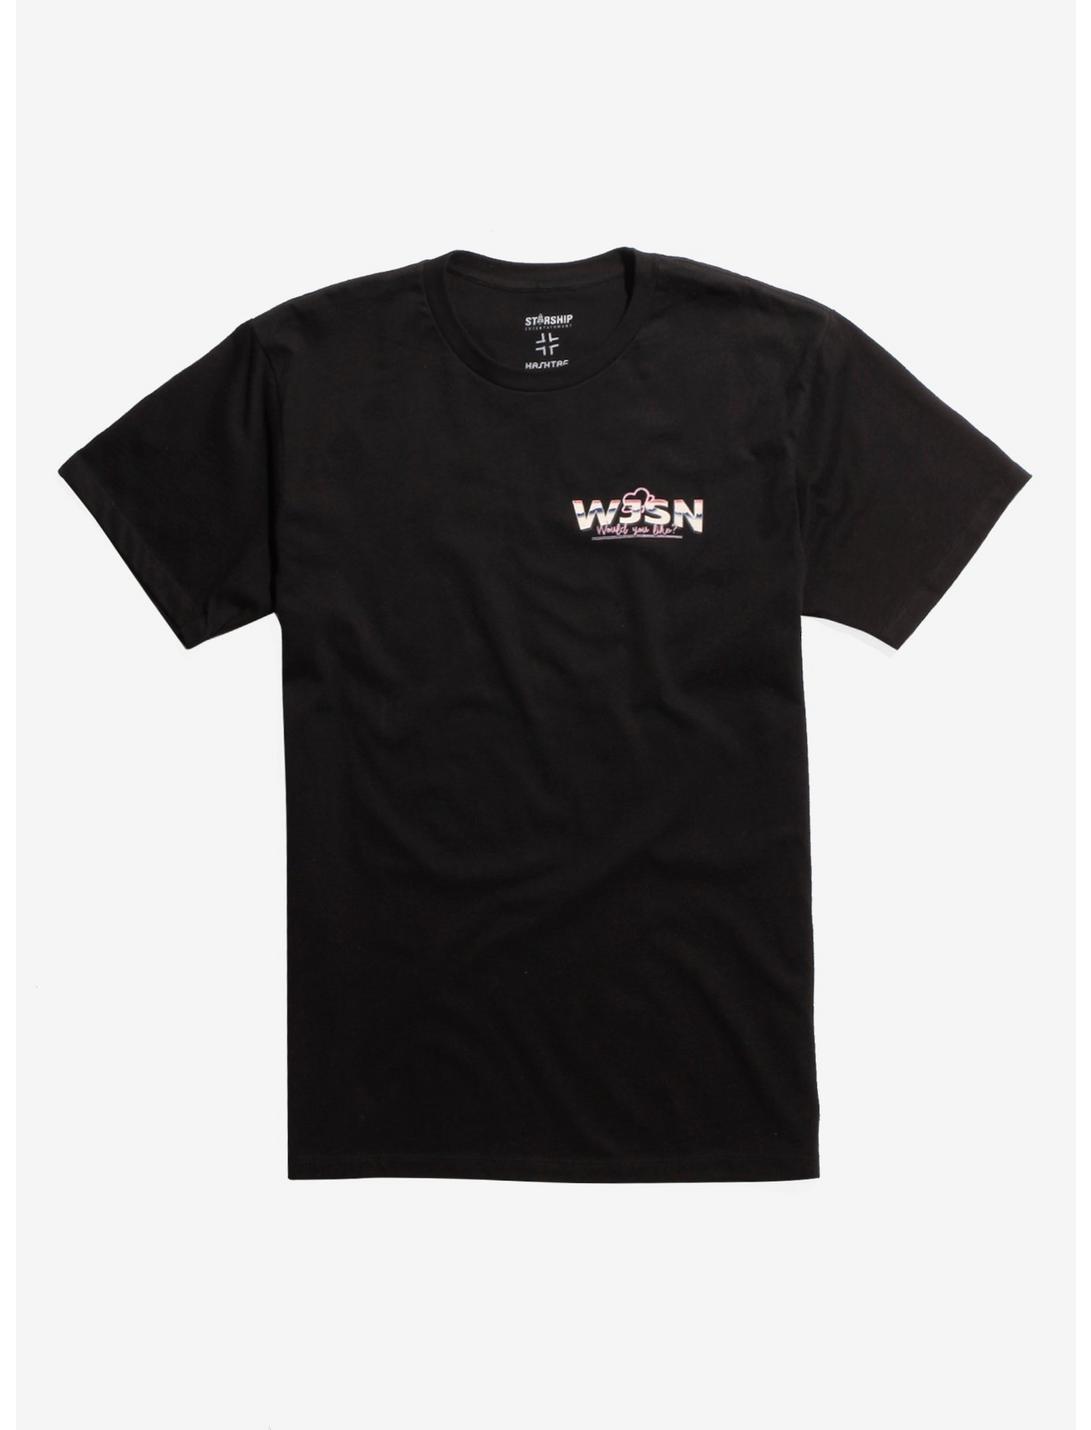 WJSN Cosmic Girls Would You Like? T-Shirt, BLACK, hi-res